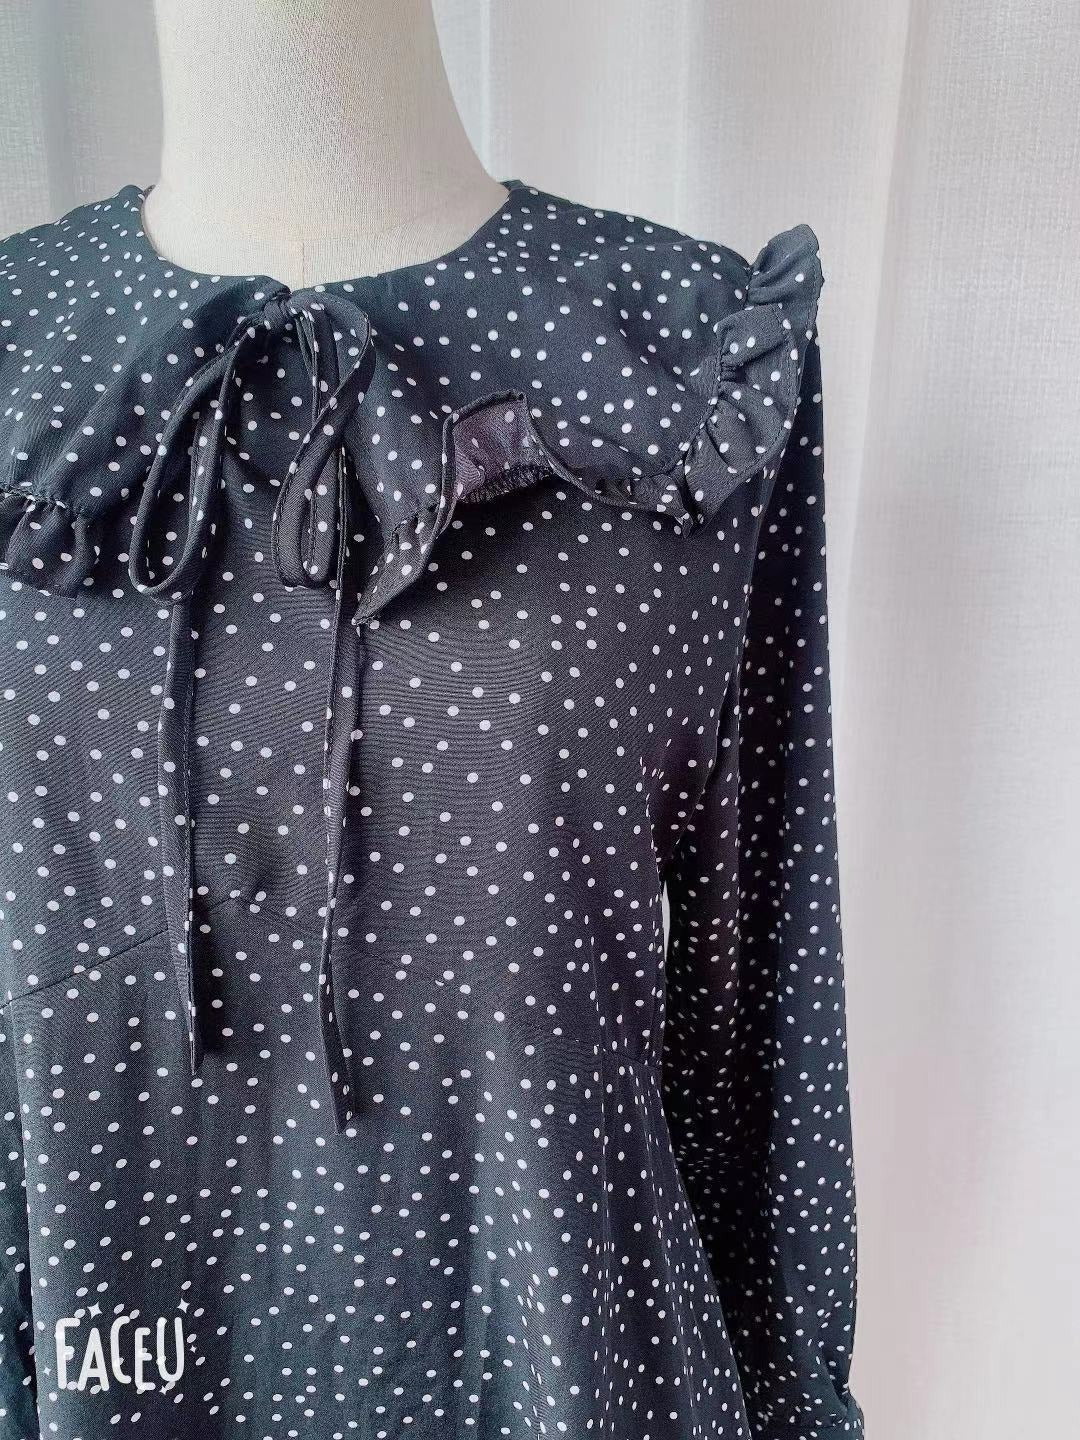 S-XL Plus Size gothic Vintage oversize long Sleeve dress